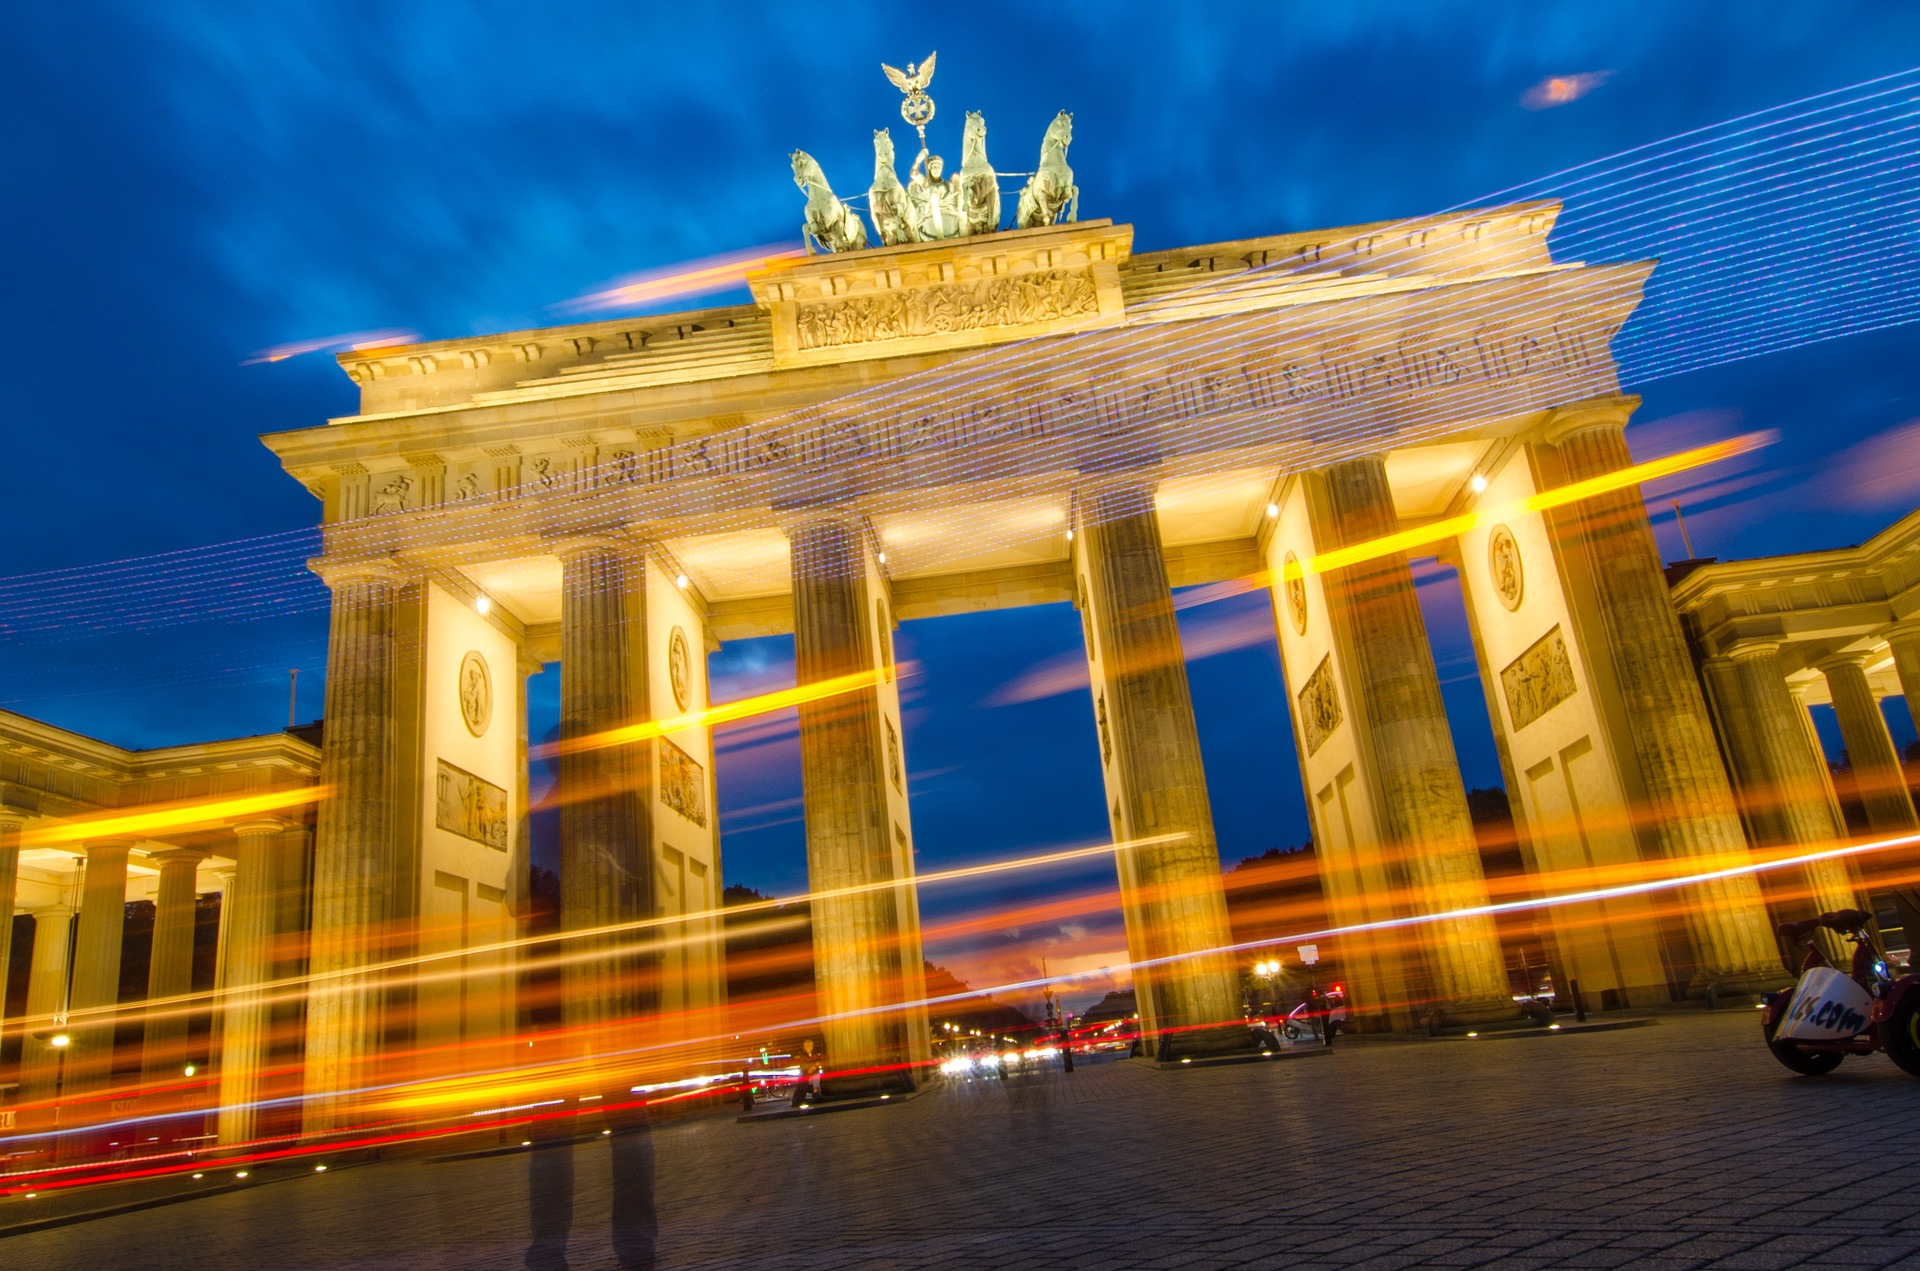 Alexanderplatz Berlin Köln nach Berlin Flug & Hotel ab 90,00€ - eine Woche Berlin ab 202,00€